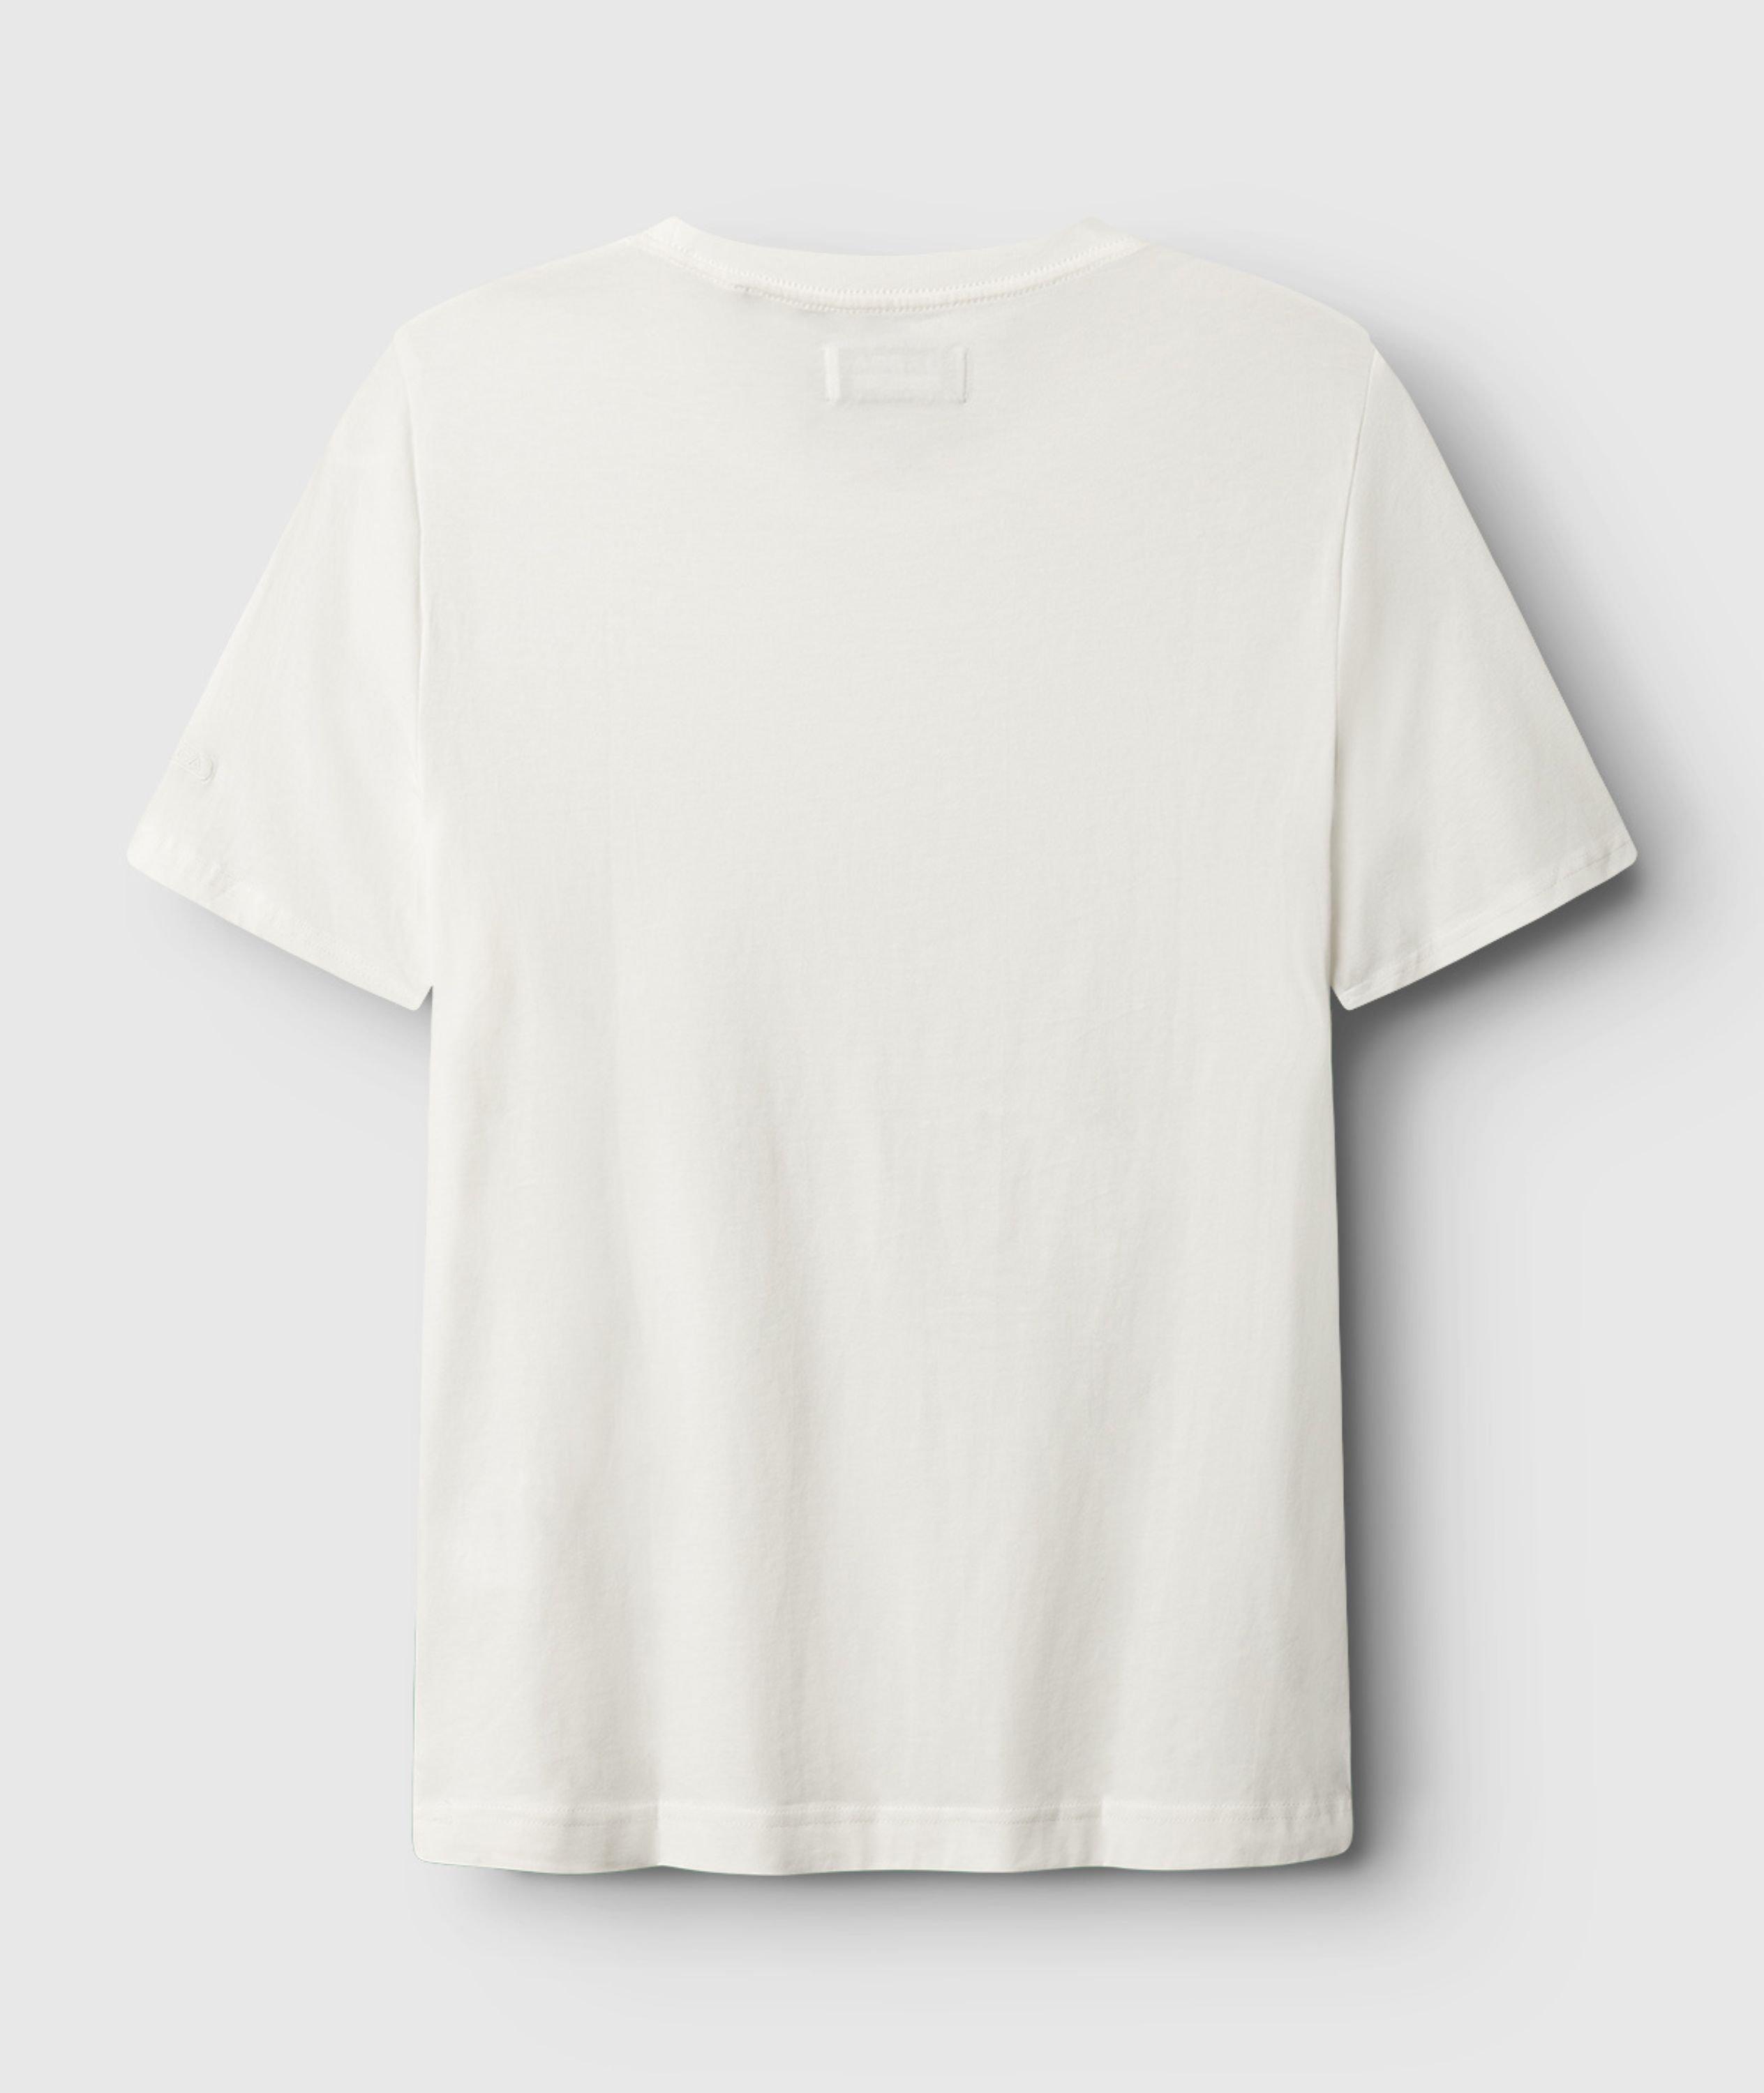 Dune Organic Cotton T-Shirt image 1